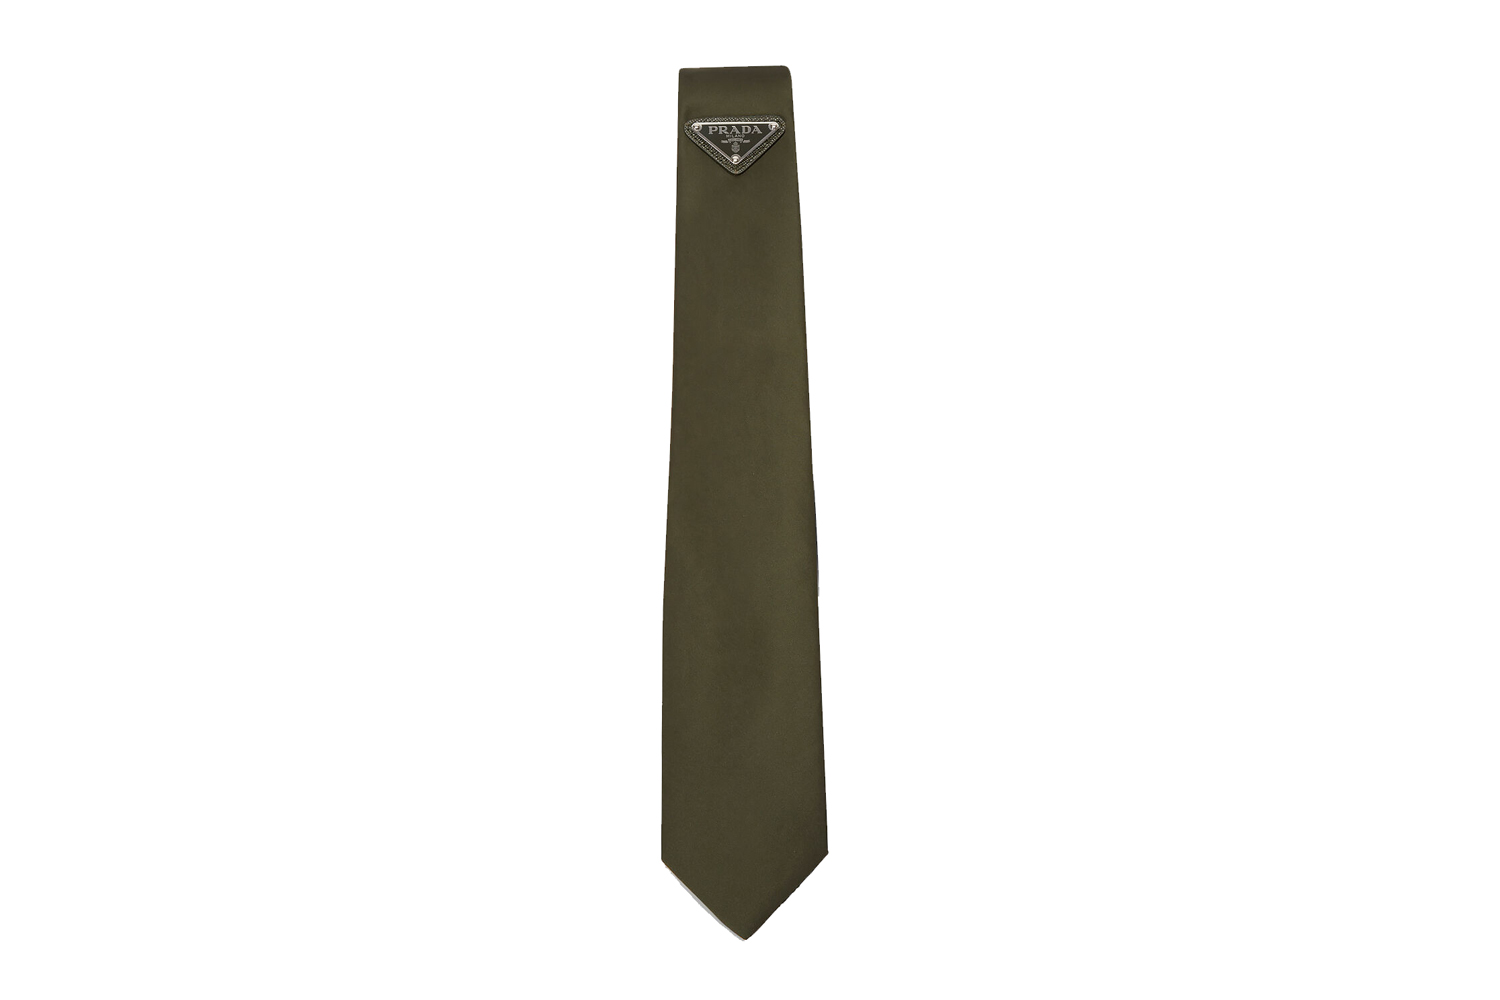 Prada Gabardine Nylon Triangle Logo Tie in Green | Hypebeast